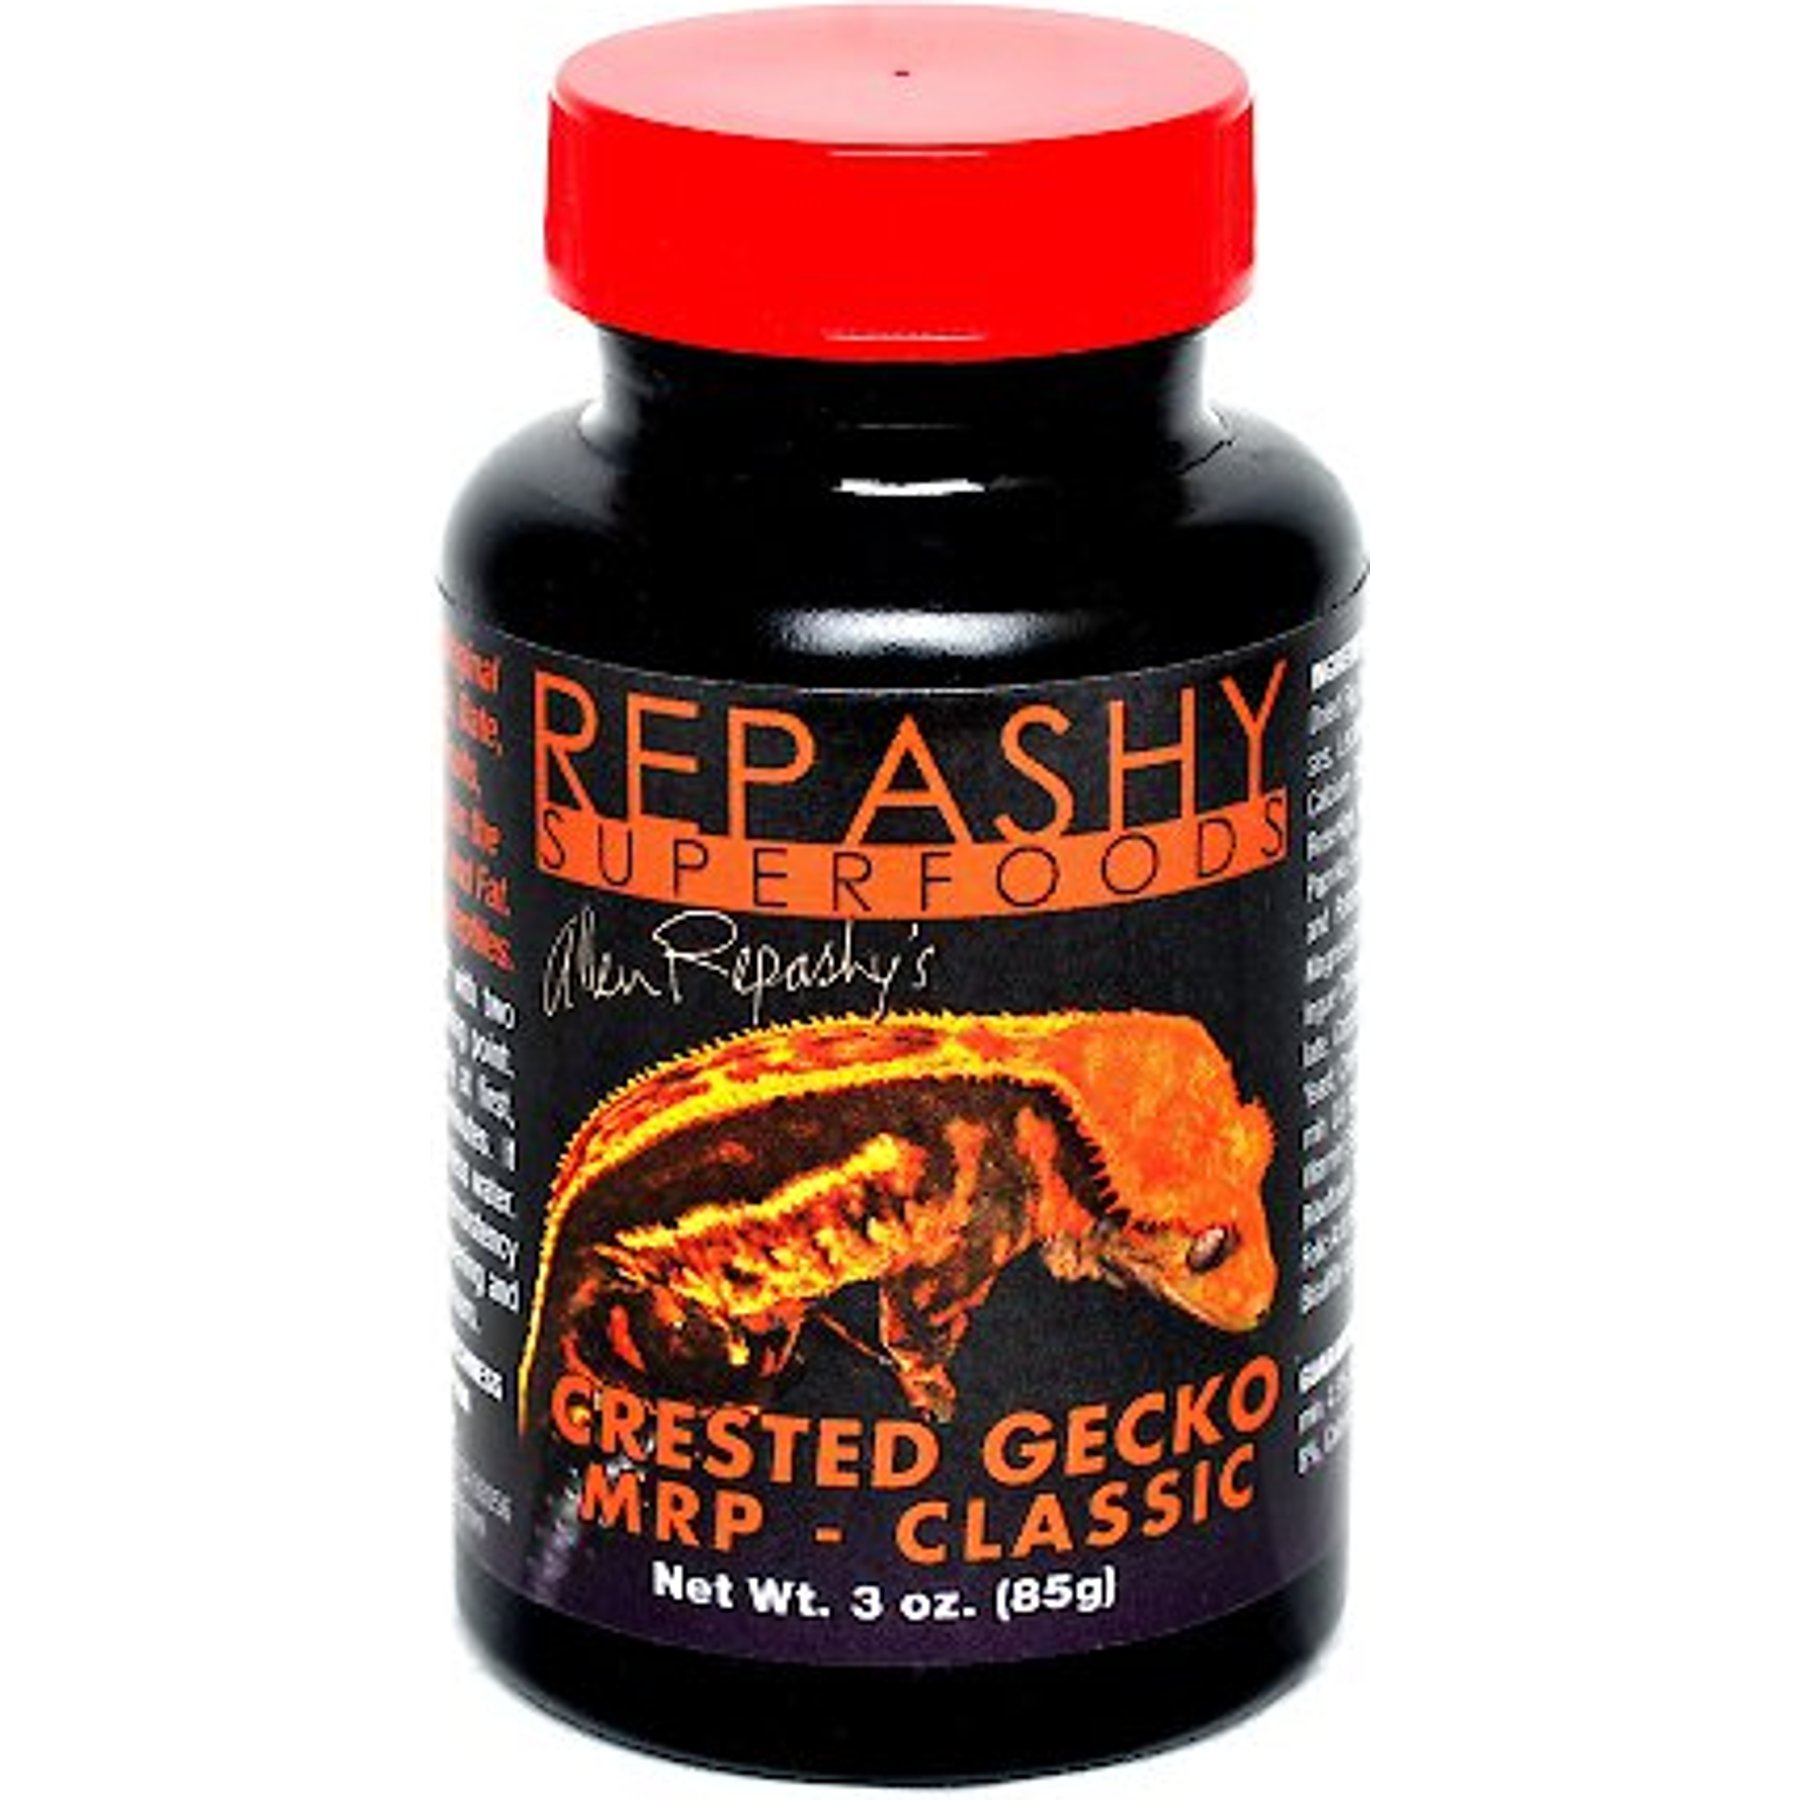 Repashy Repashy Crested Gecko Classic 3oz - Snake Discovery